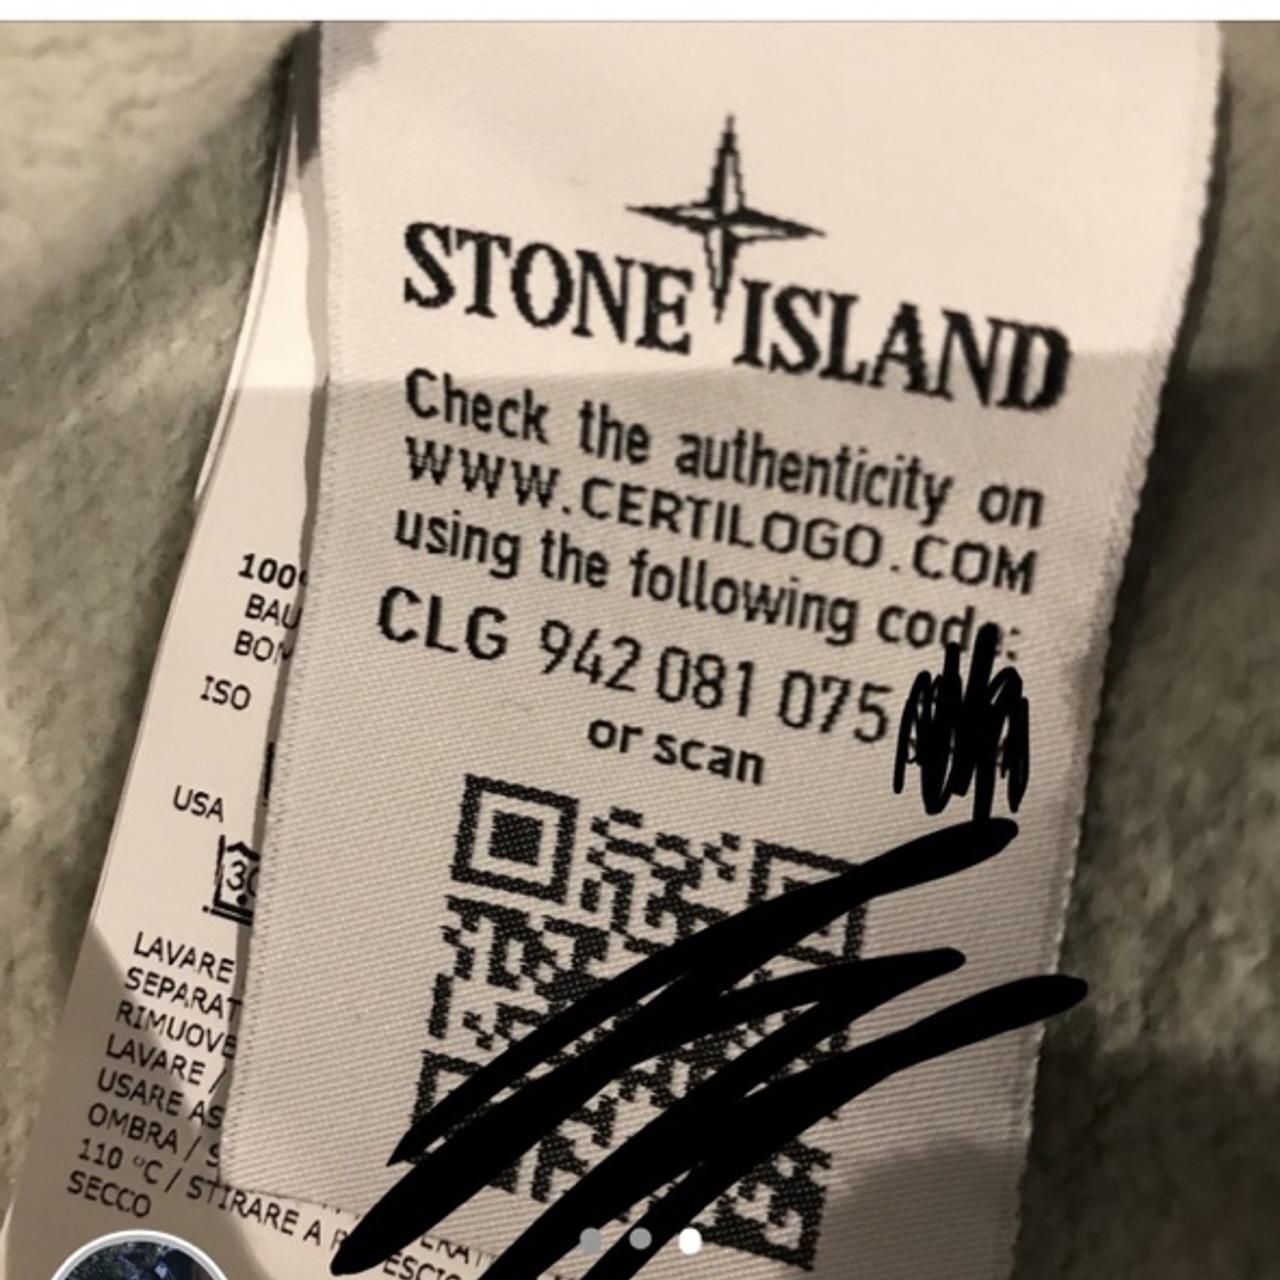 Stone island grid check camo sweatshirt in medium,... - Depop